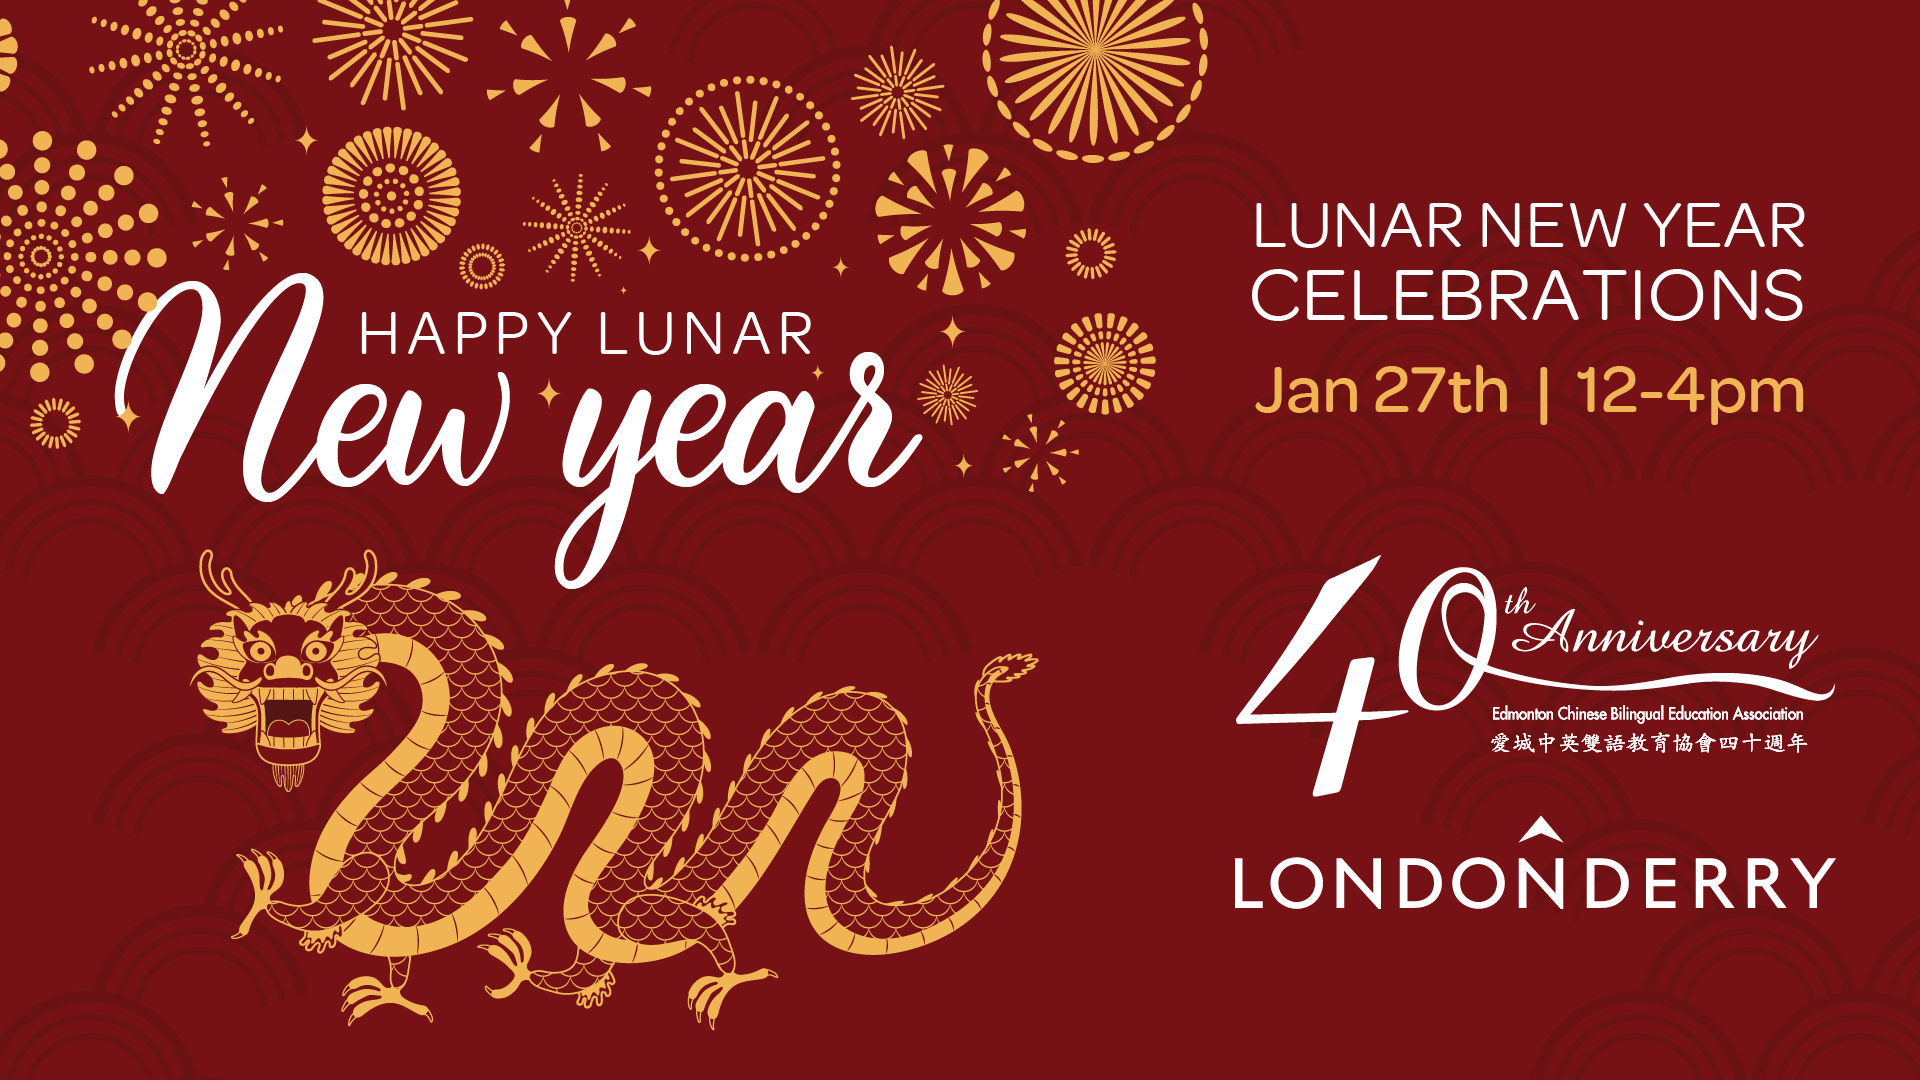 Lunar New Year Londonderry Mall